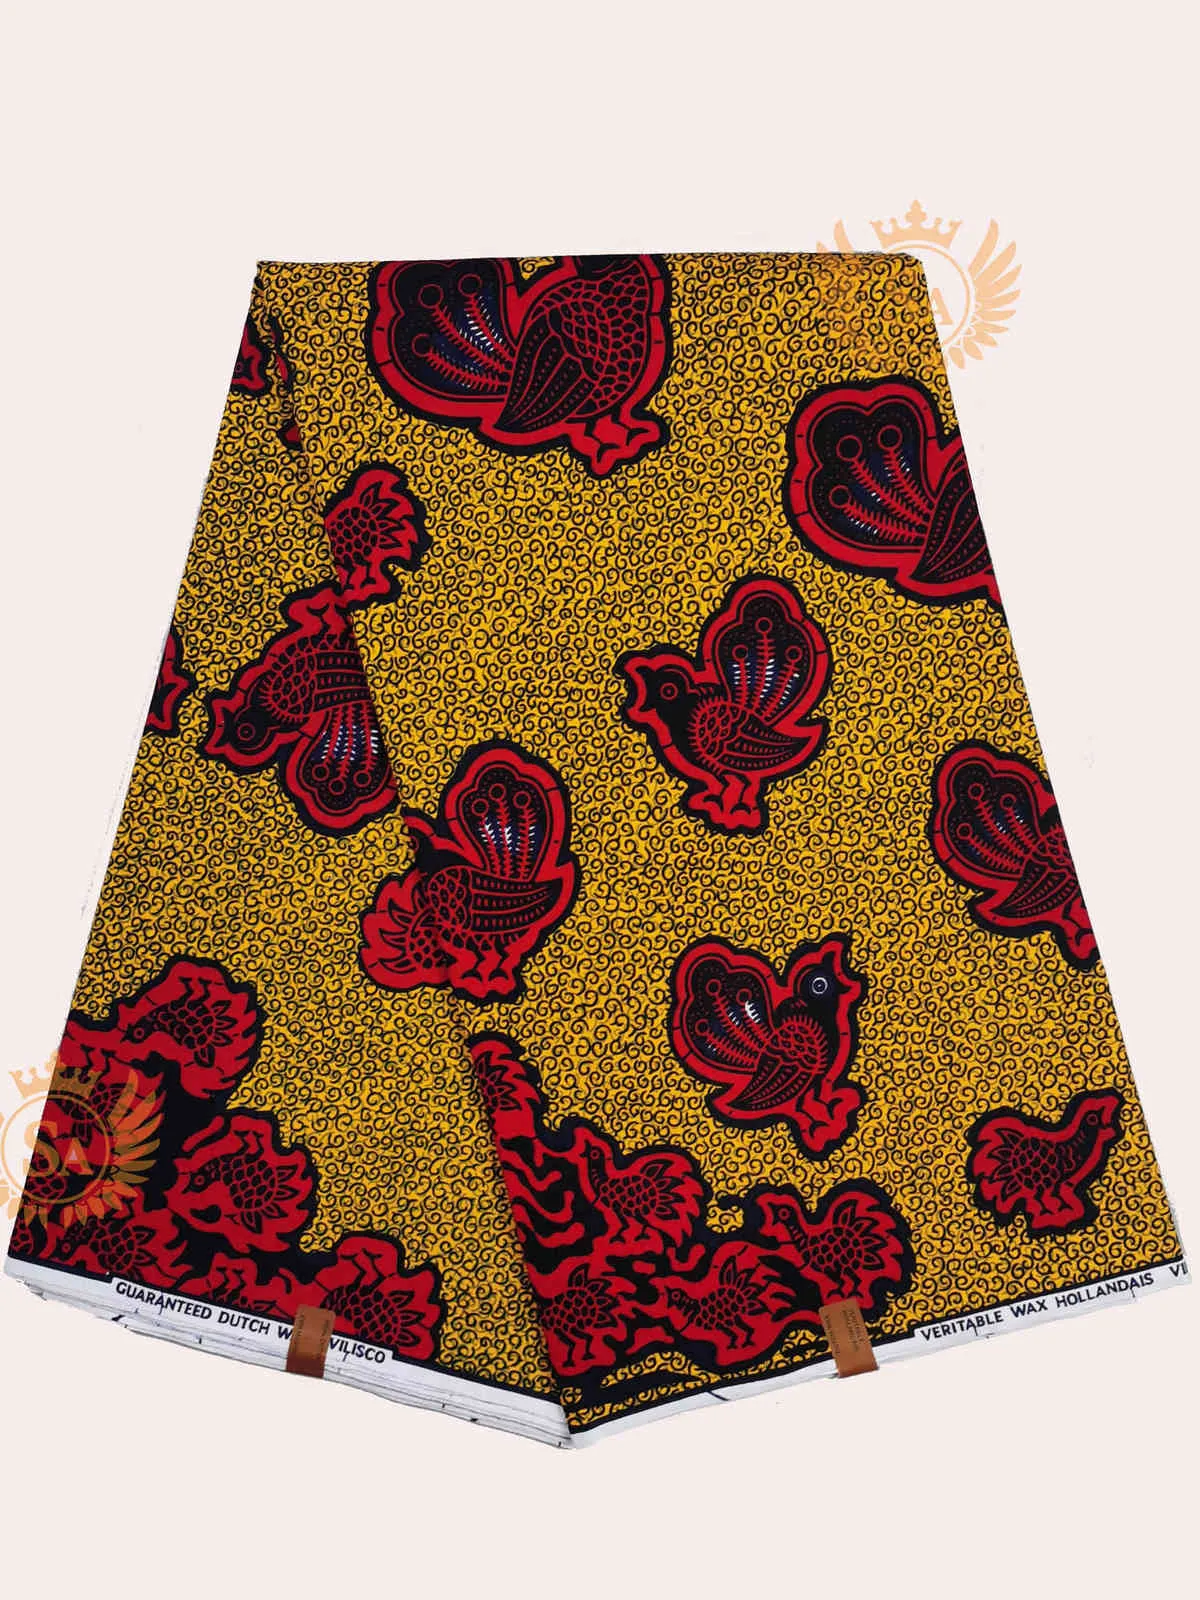 Veritable Wax D Real Wax Print Fabric Dutch Hollandais Pagne Africa Dress Cotton 02 210702